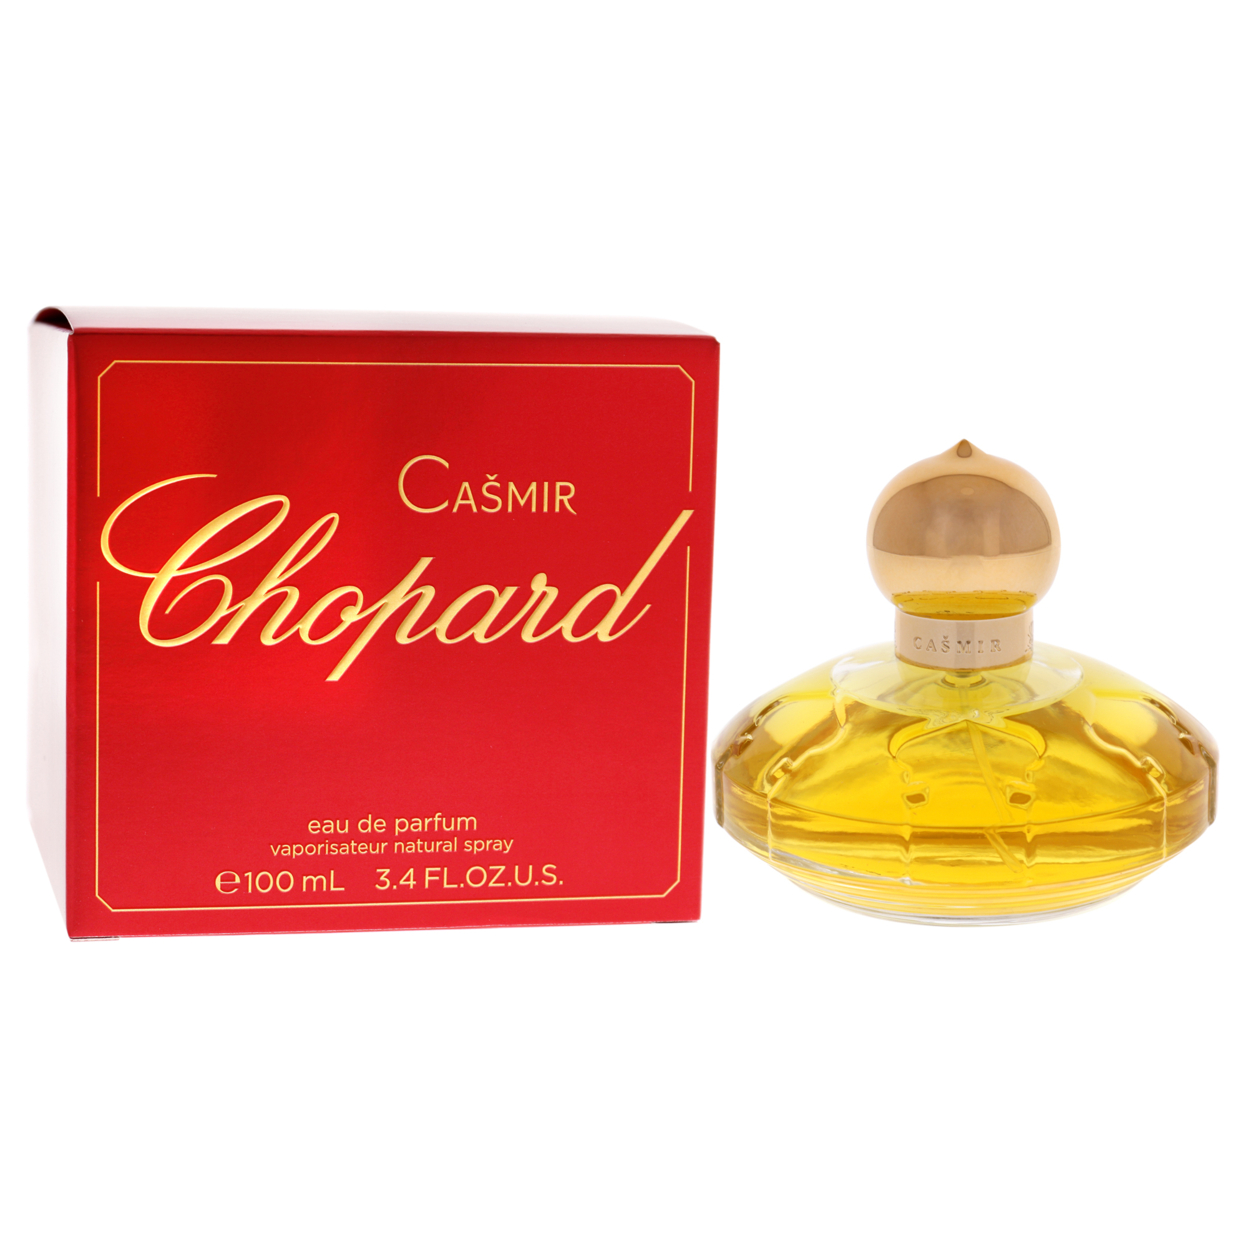 Chopard Casmir Eau de Parfum, Perfume for Women, 3.4 Oz - image 3 of 6